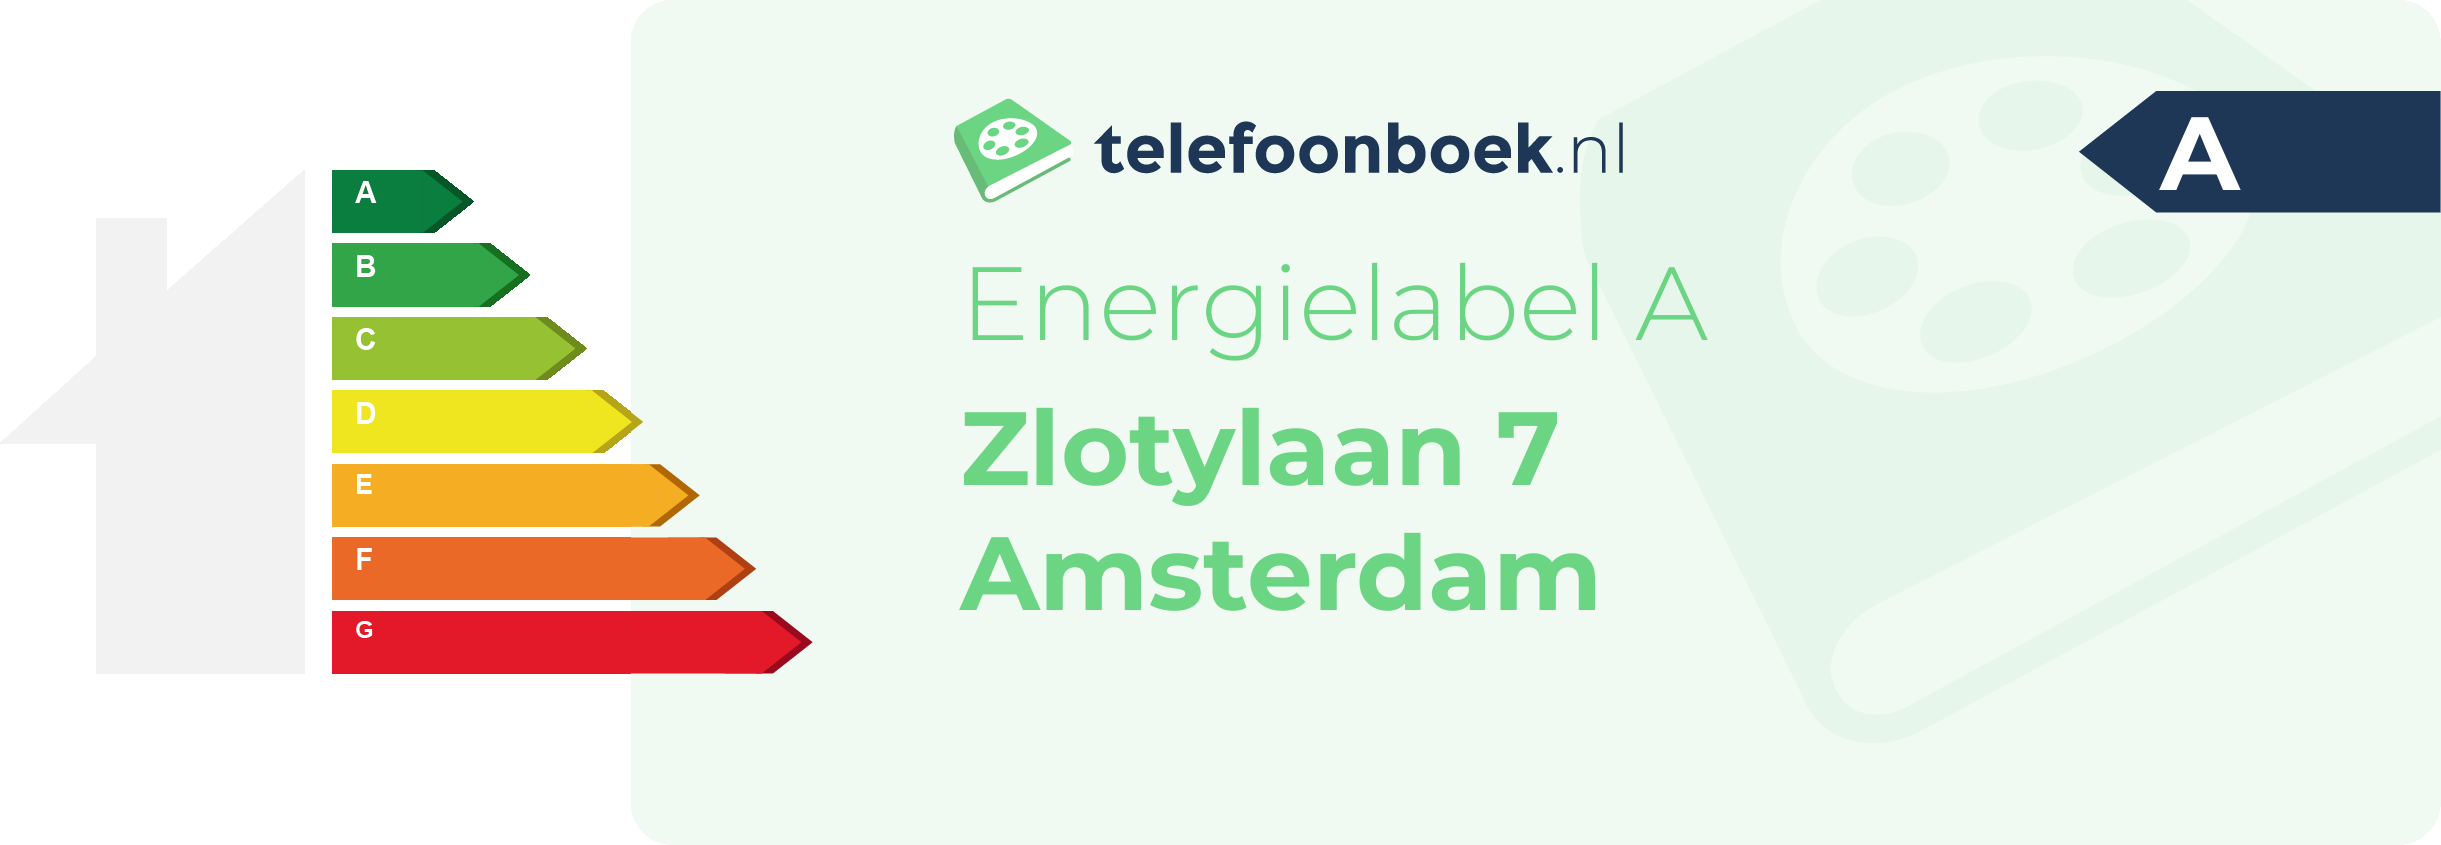 Energielabel Zlotylaan 7 Amsterdam